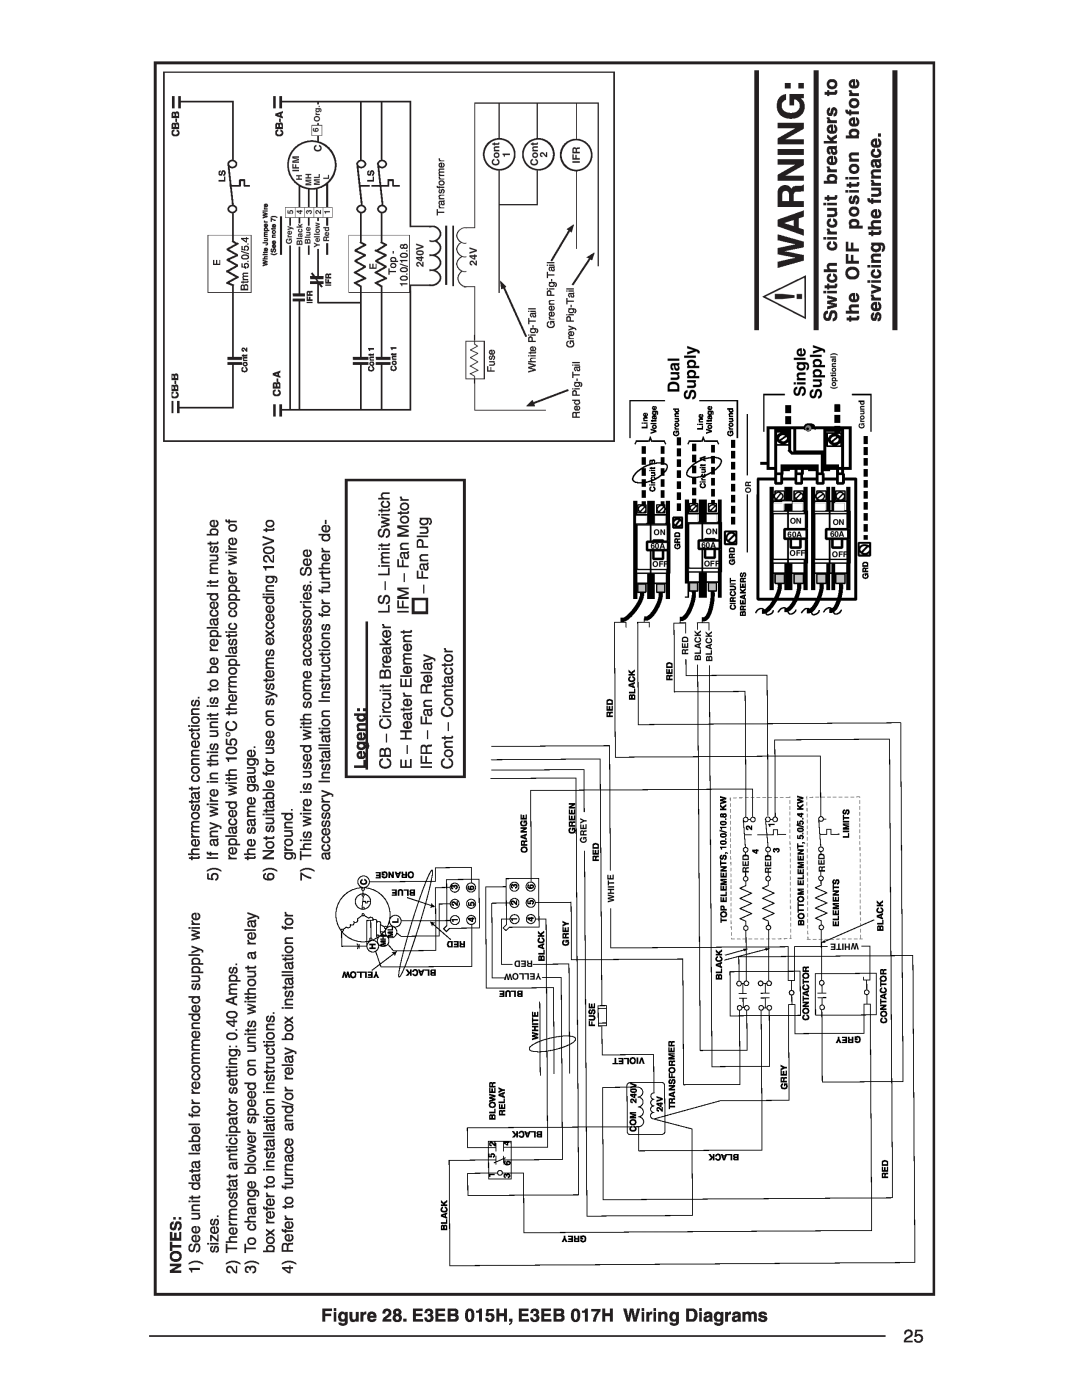 Nordyne user service E3EB 015H, E3EB 017H Wiring Diagrams, Dual, Single Supply 